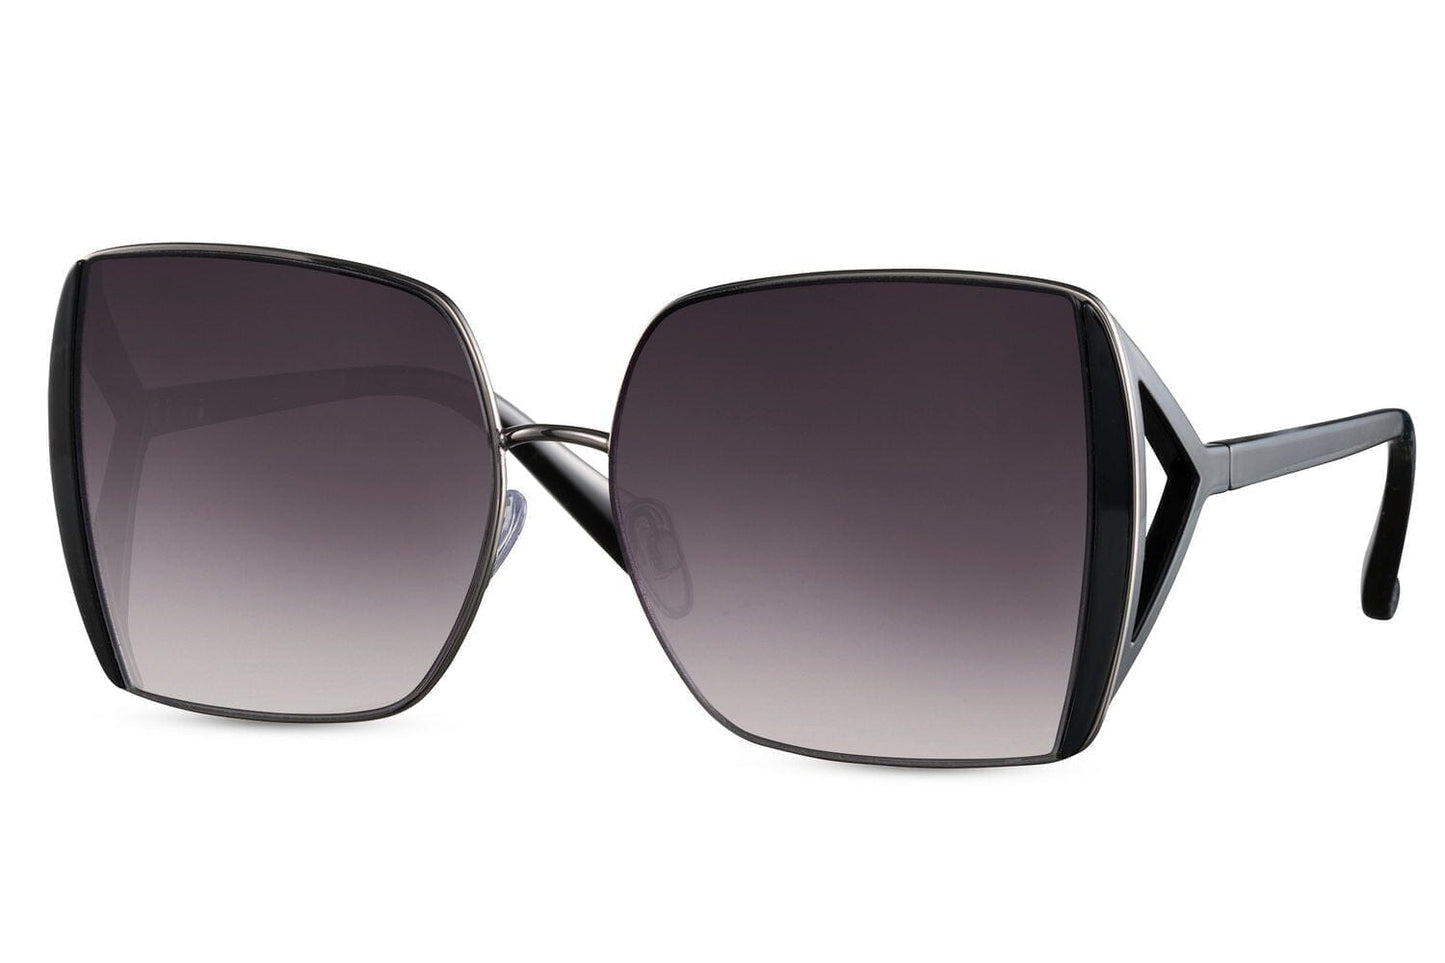 Square metal sunglasses. black edges. Uv400 protected.